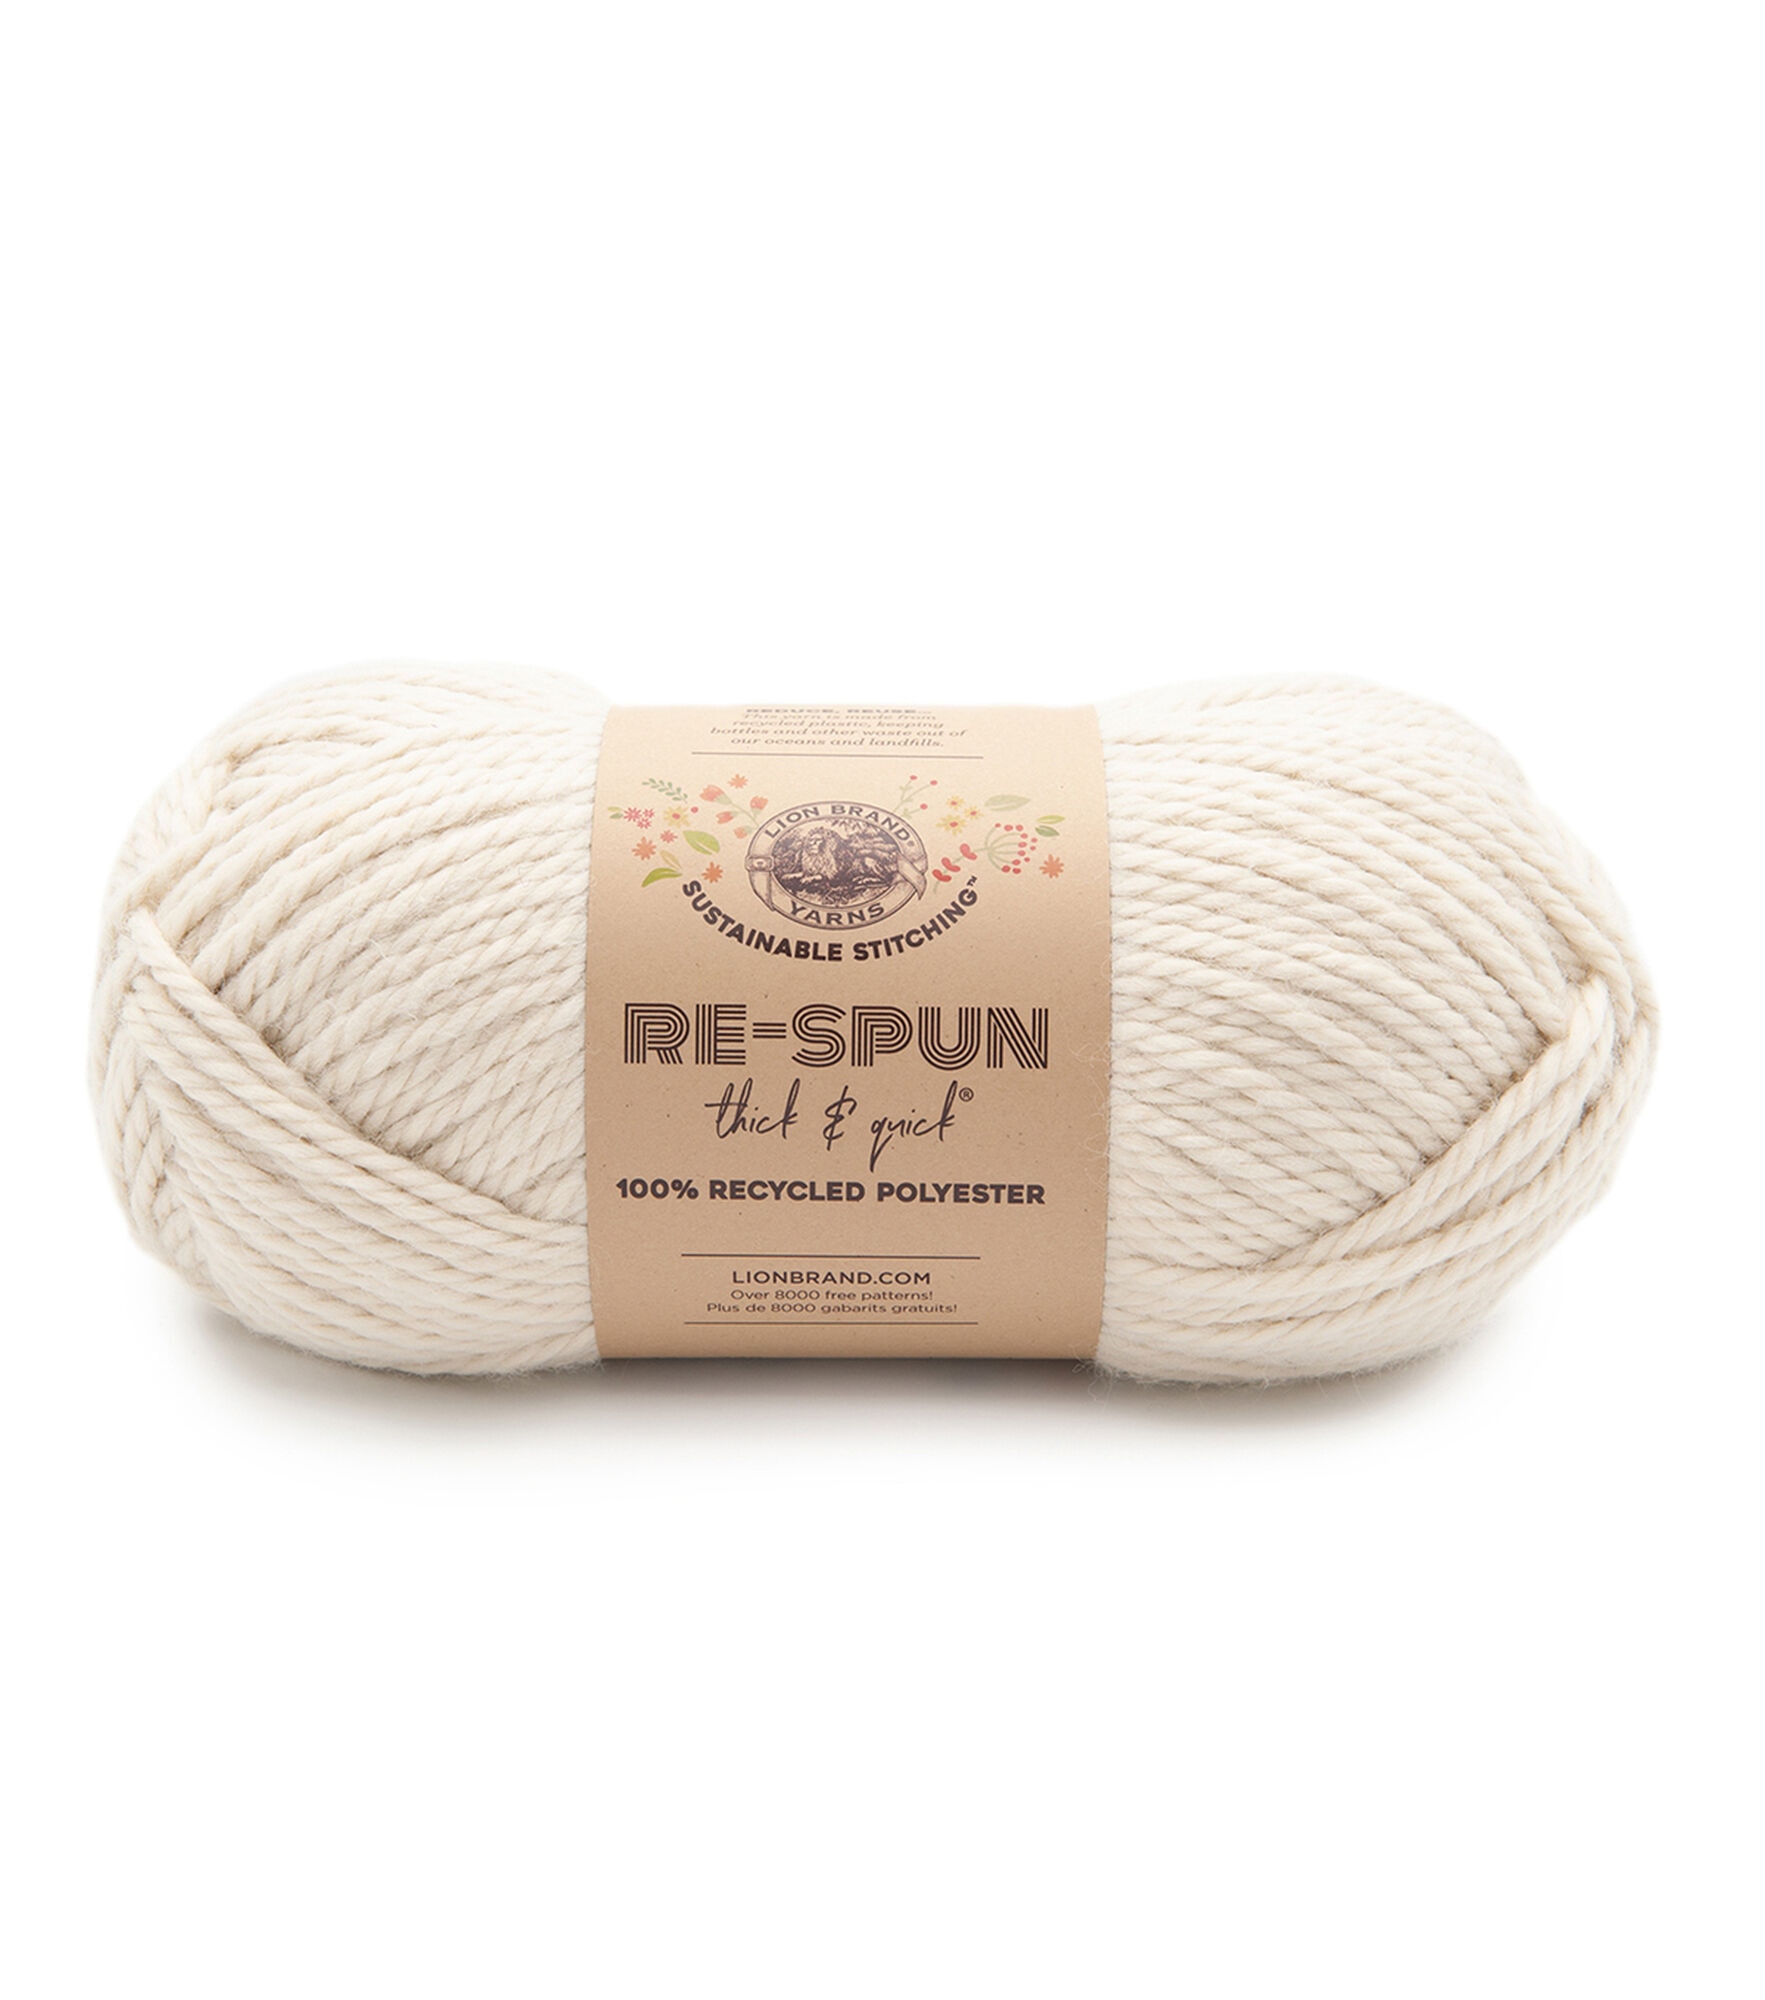 Comfy Cotton Blend Lion Brand Crochet Knitting Yarn Large Skein